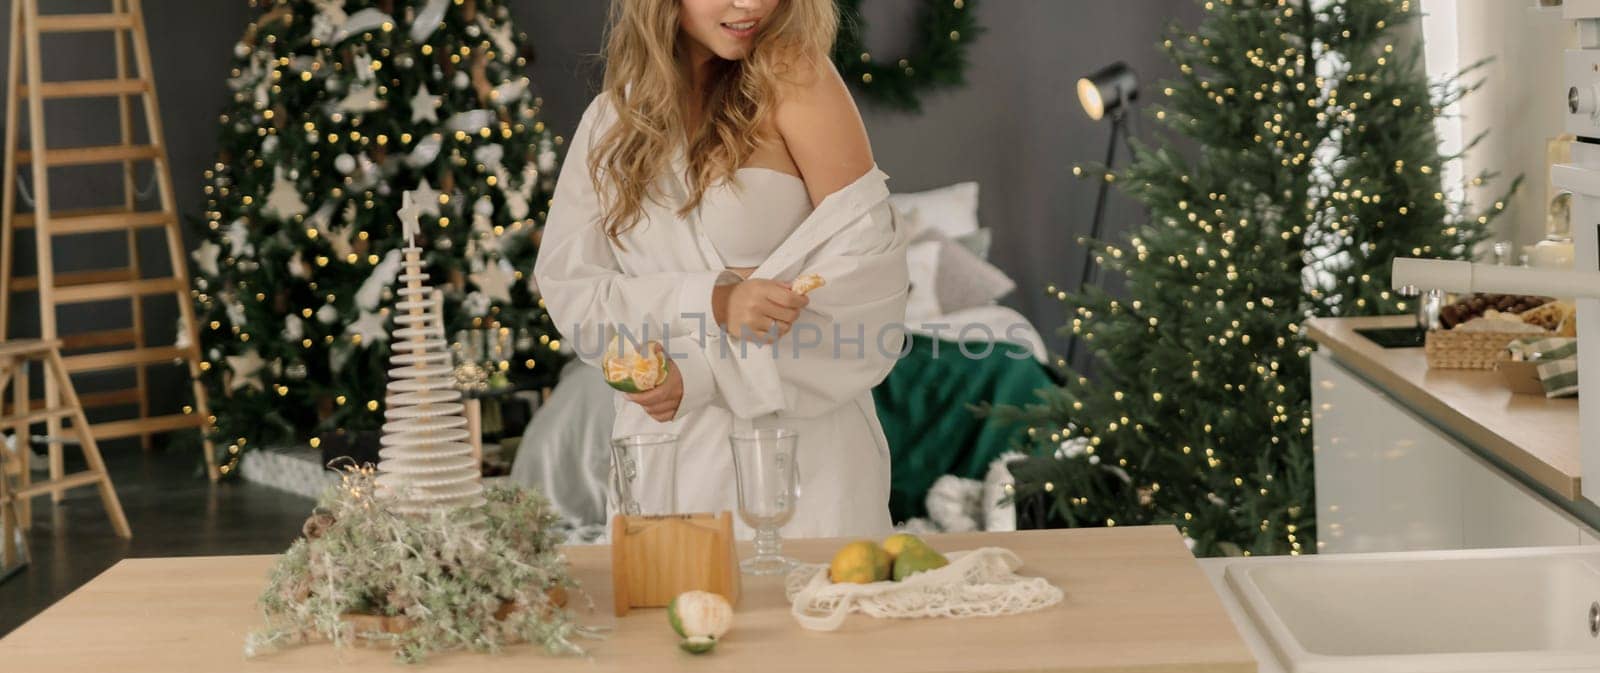 Woman Kitchen Christmas decor in white shirt, peeling tangerines. Illustrating New Year's mood holiday preparations by Matiunina